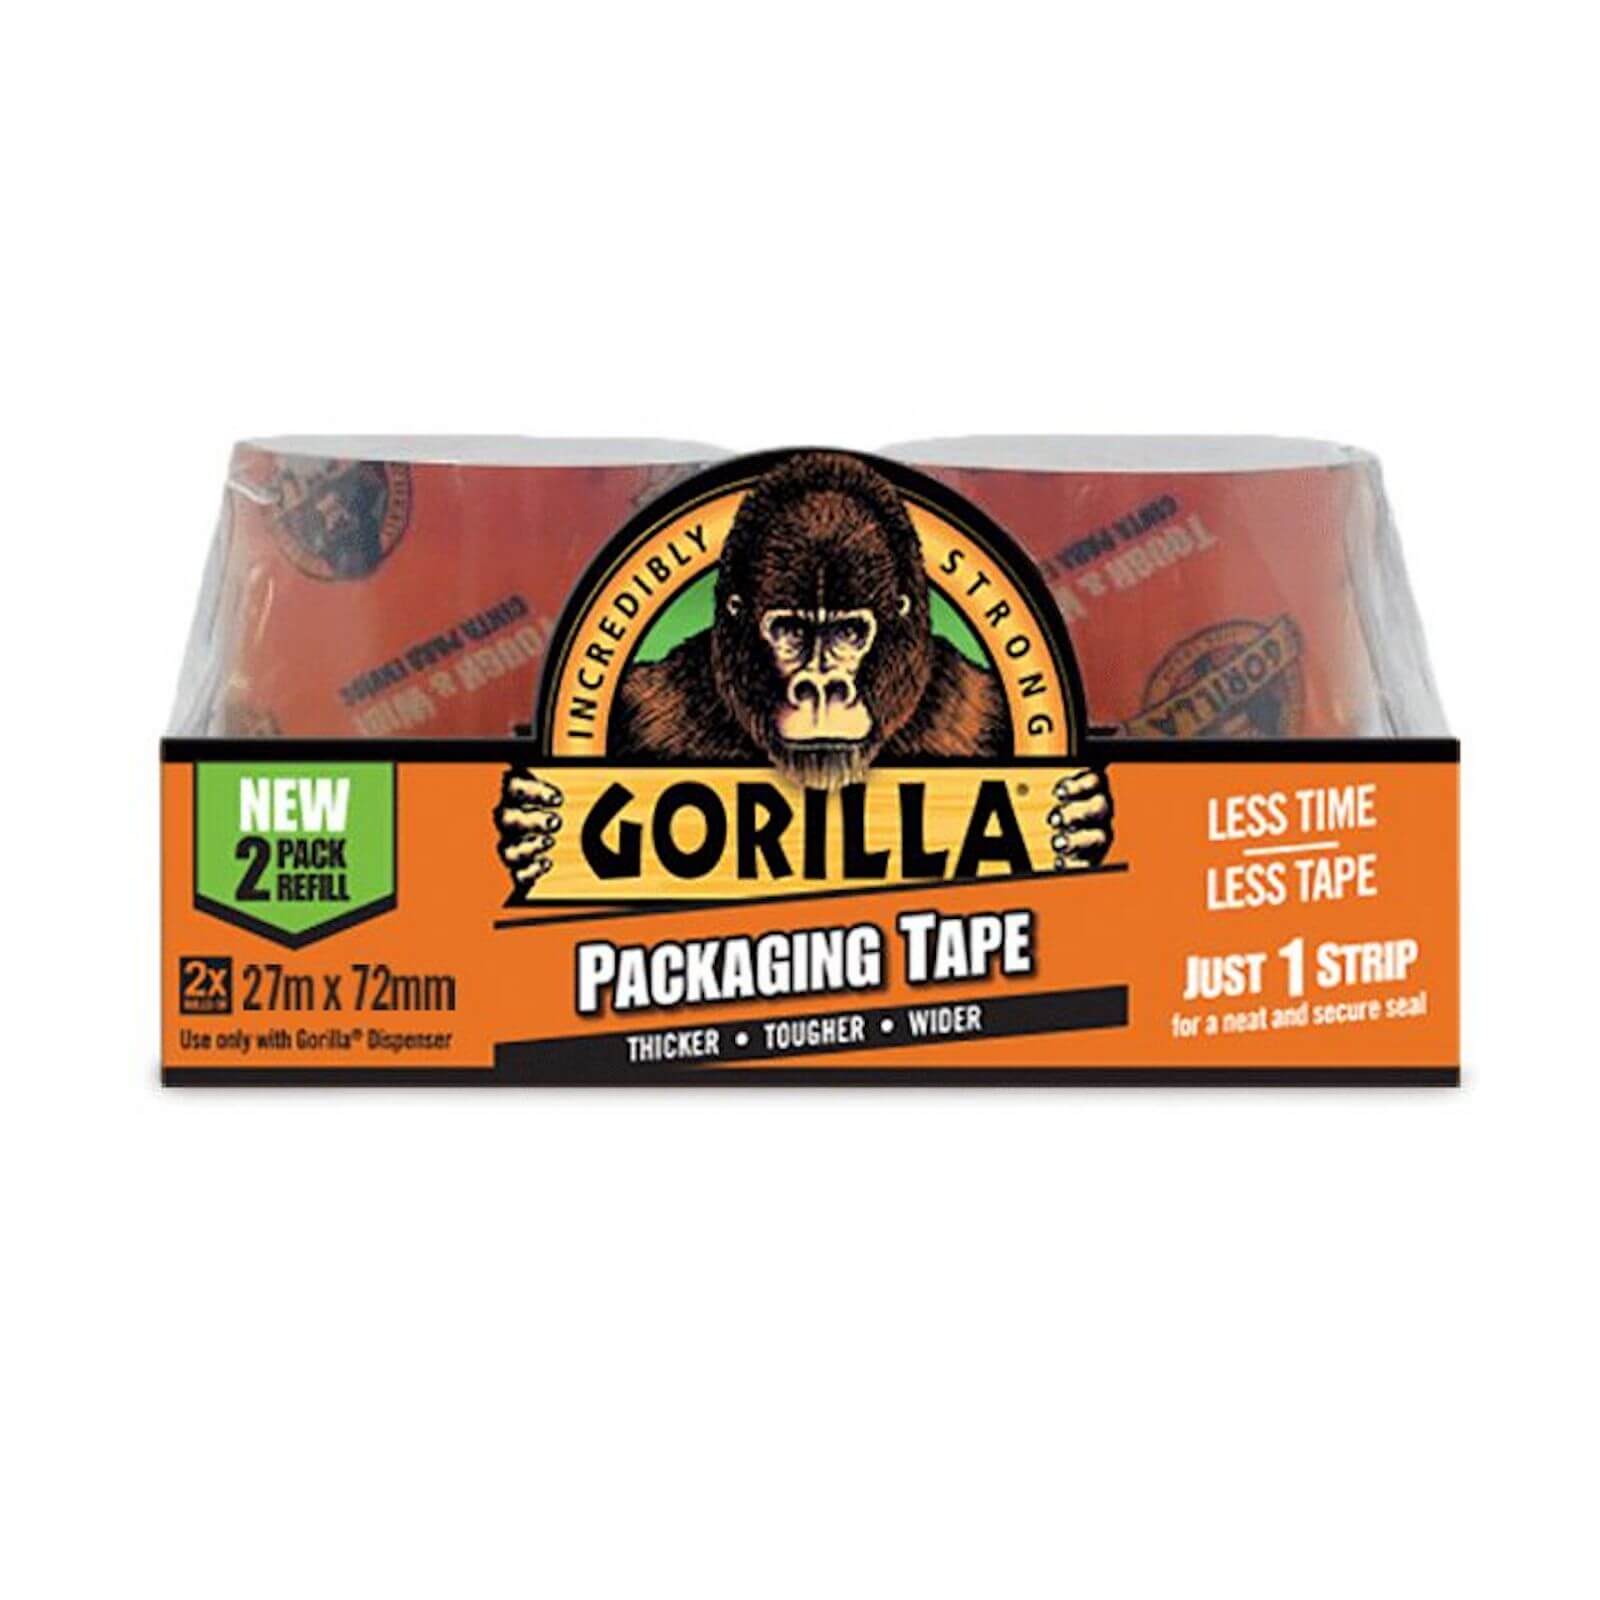 Gorilla Packaging Tape (2 x pack refill - 27m)